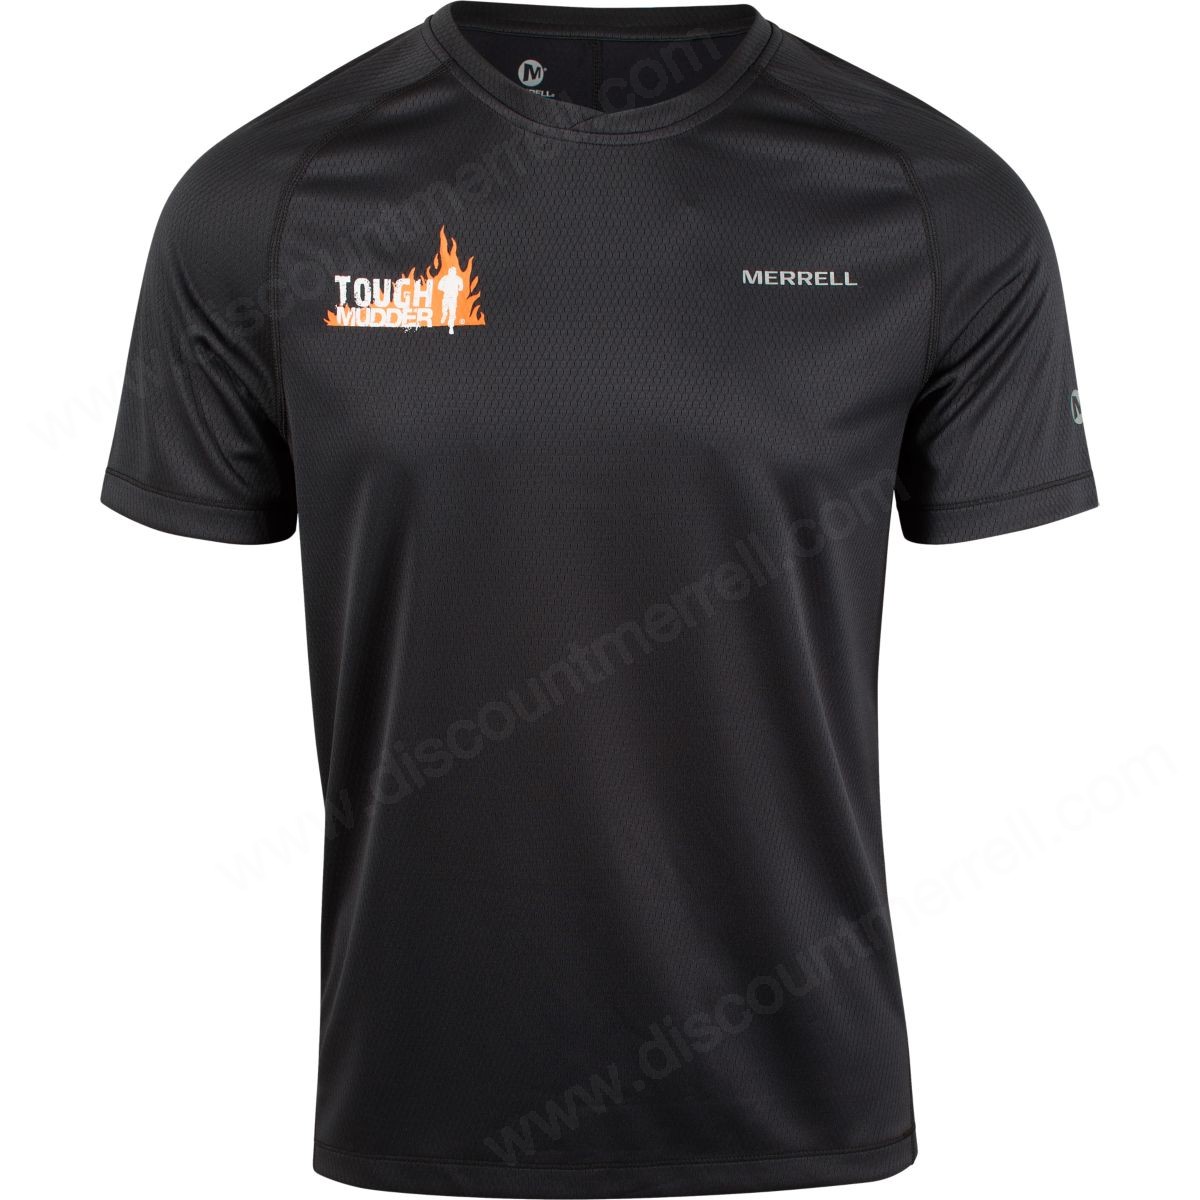 Merrell Man's Tough Mudder Fastrex Short Sleeve Tech Tshirts Black/white - -0